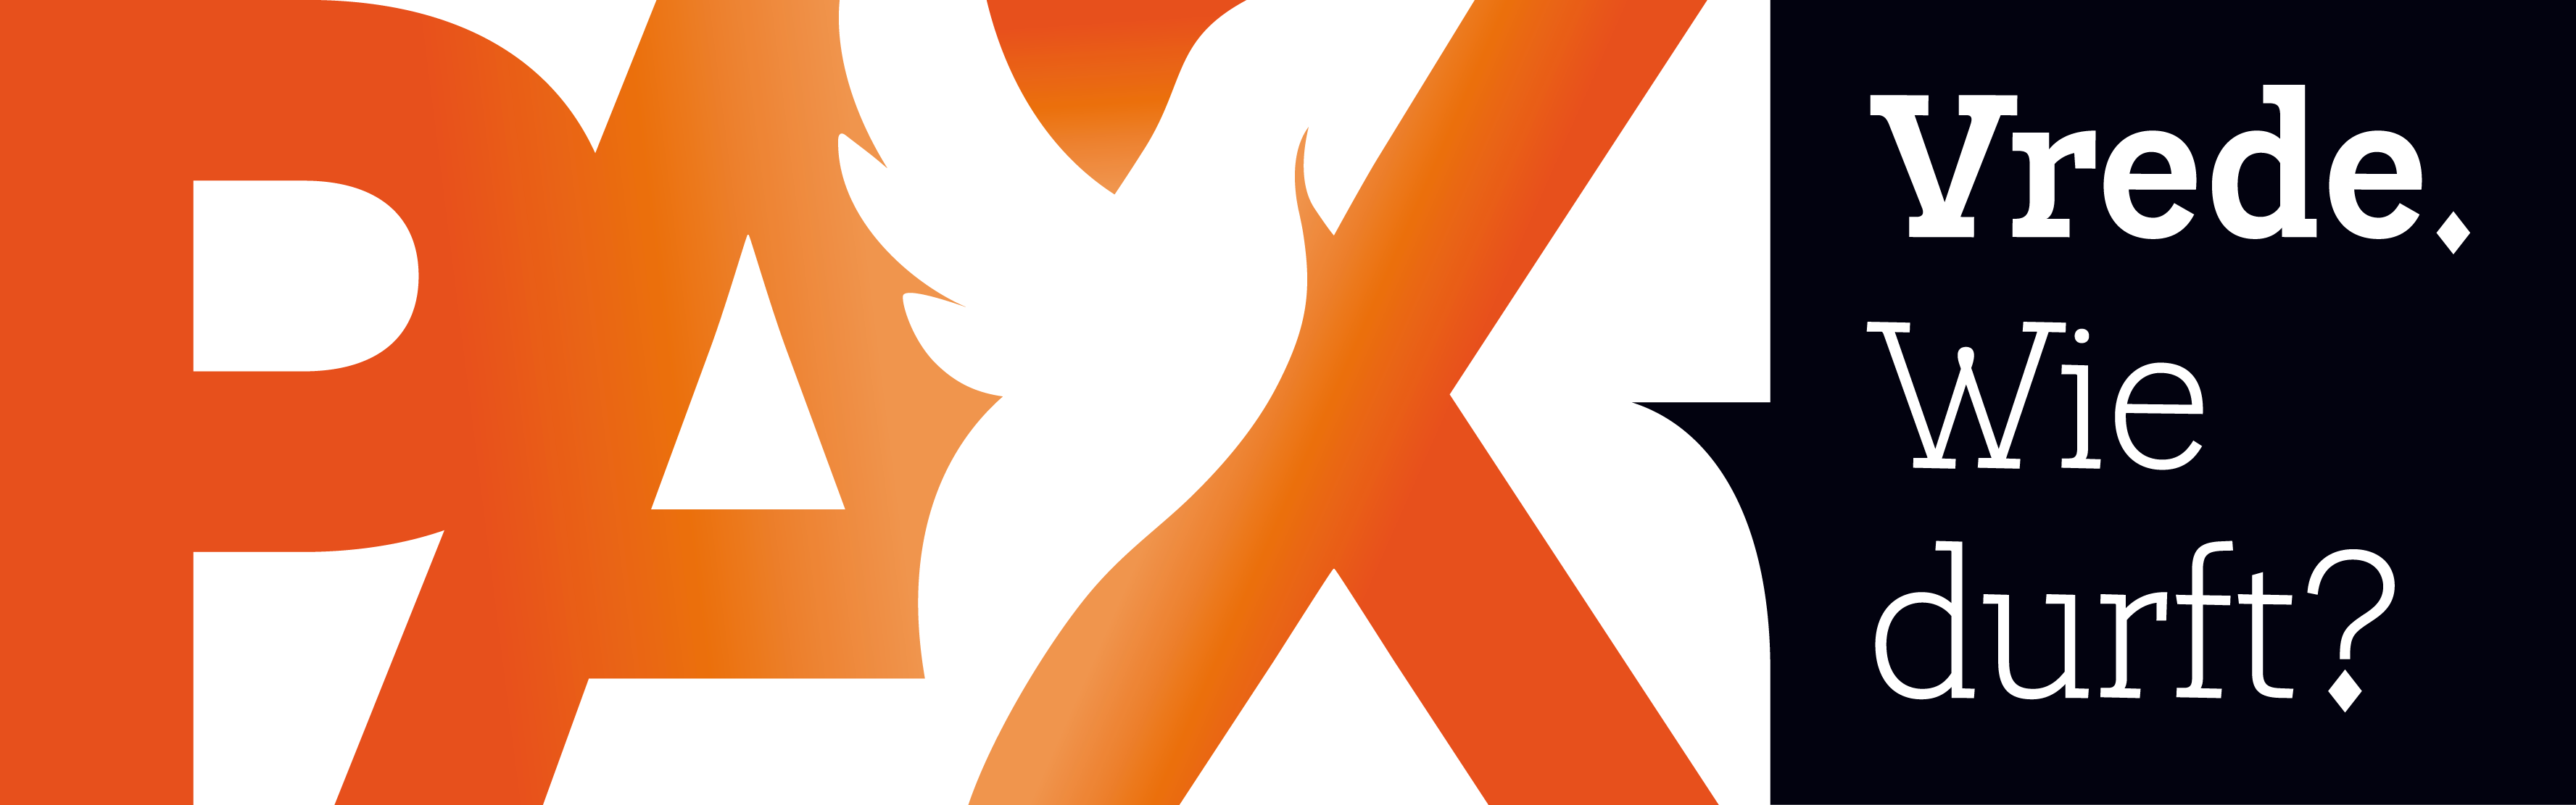 PAX_Logo_NL_WithSlogan_WEB_FC